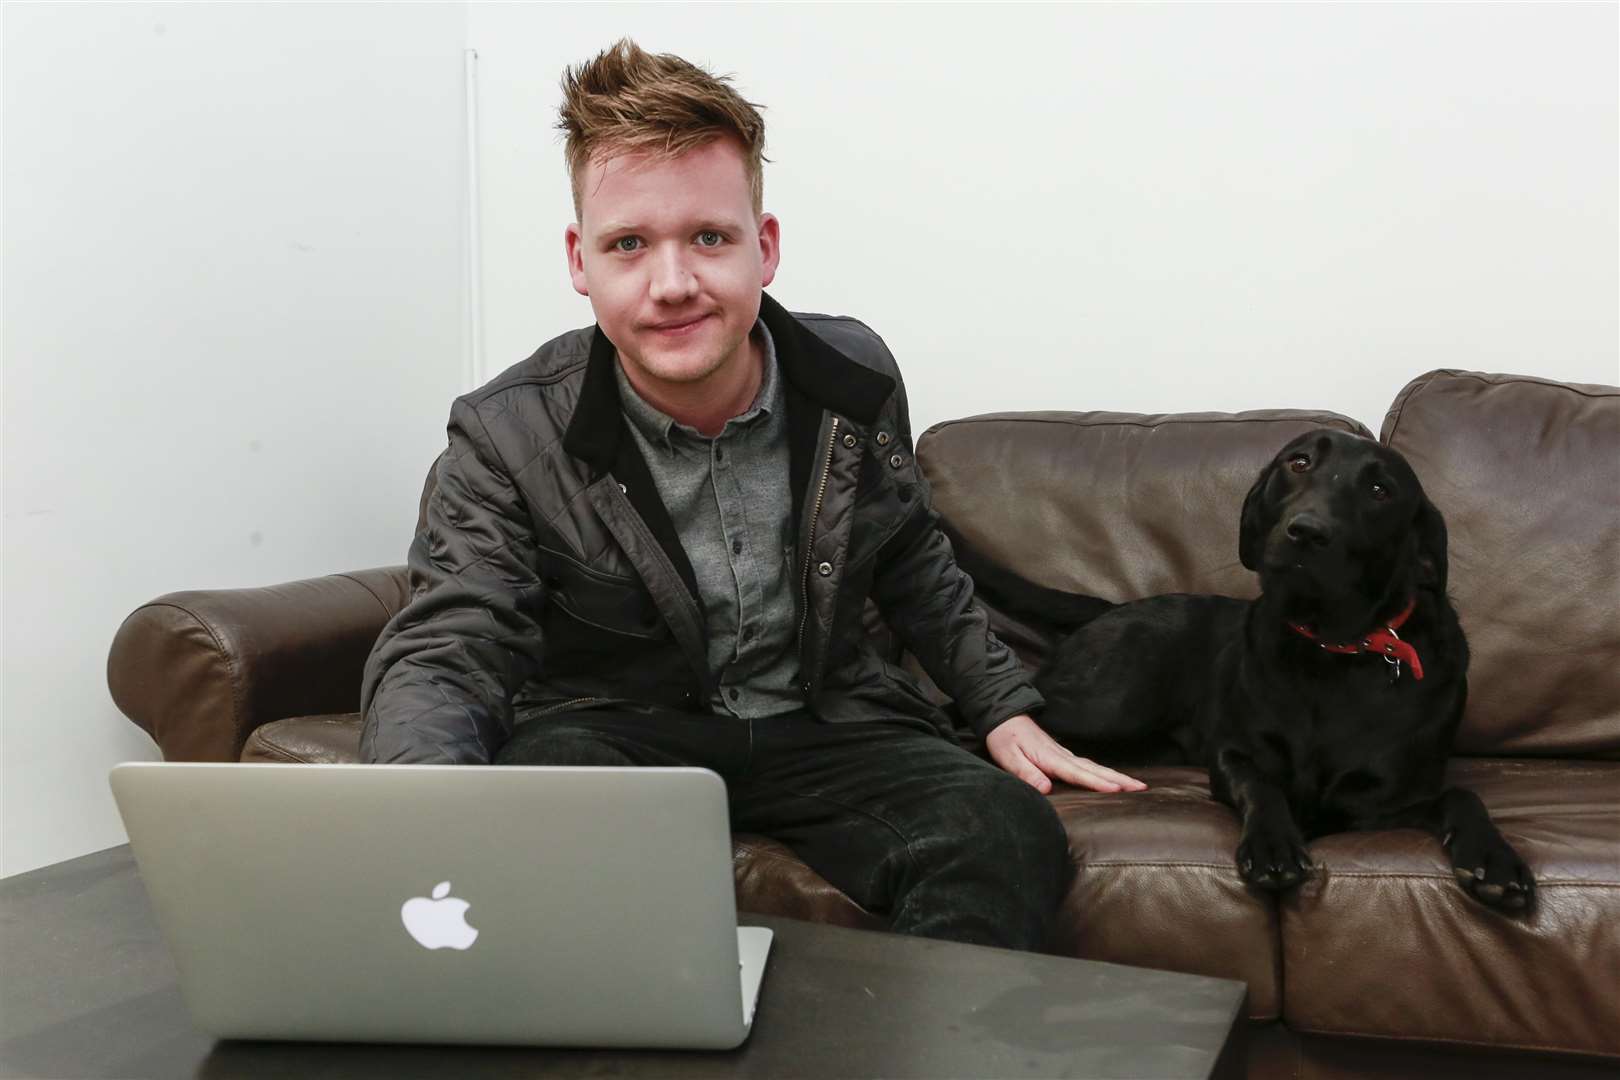 Owen Hunnam with his dog Lola